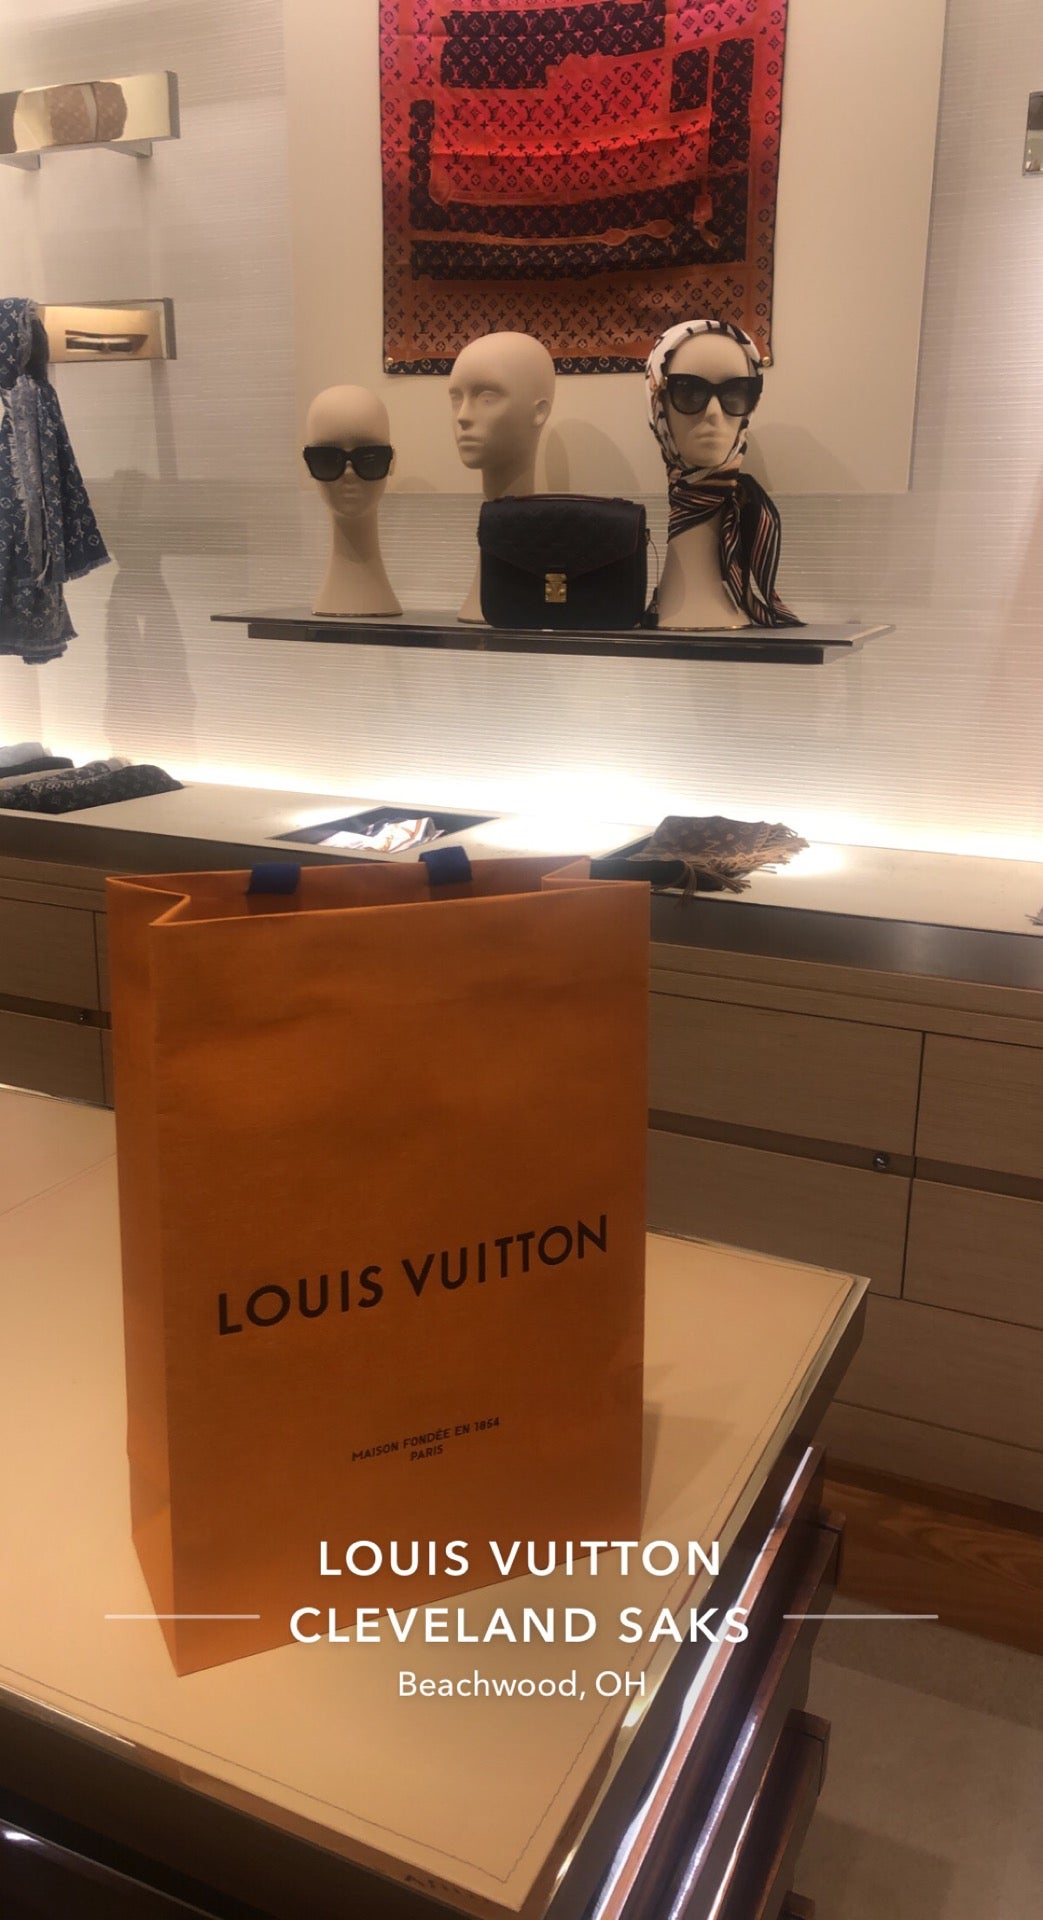 Louis Vuitton Cleveland Saks, 26100 Cedar Rd, Beachwood, OH, Shoe Stores -  MapQuest